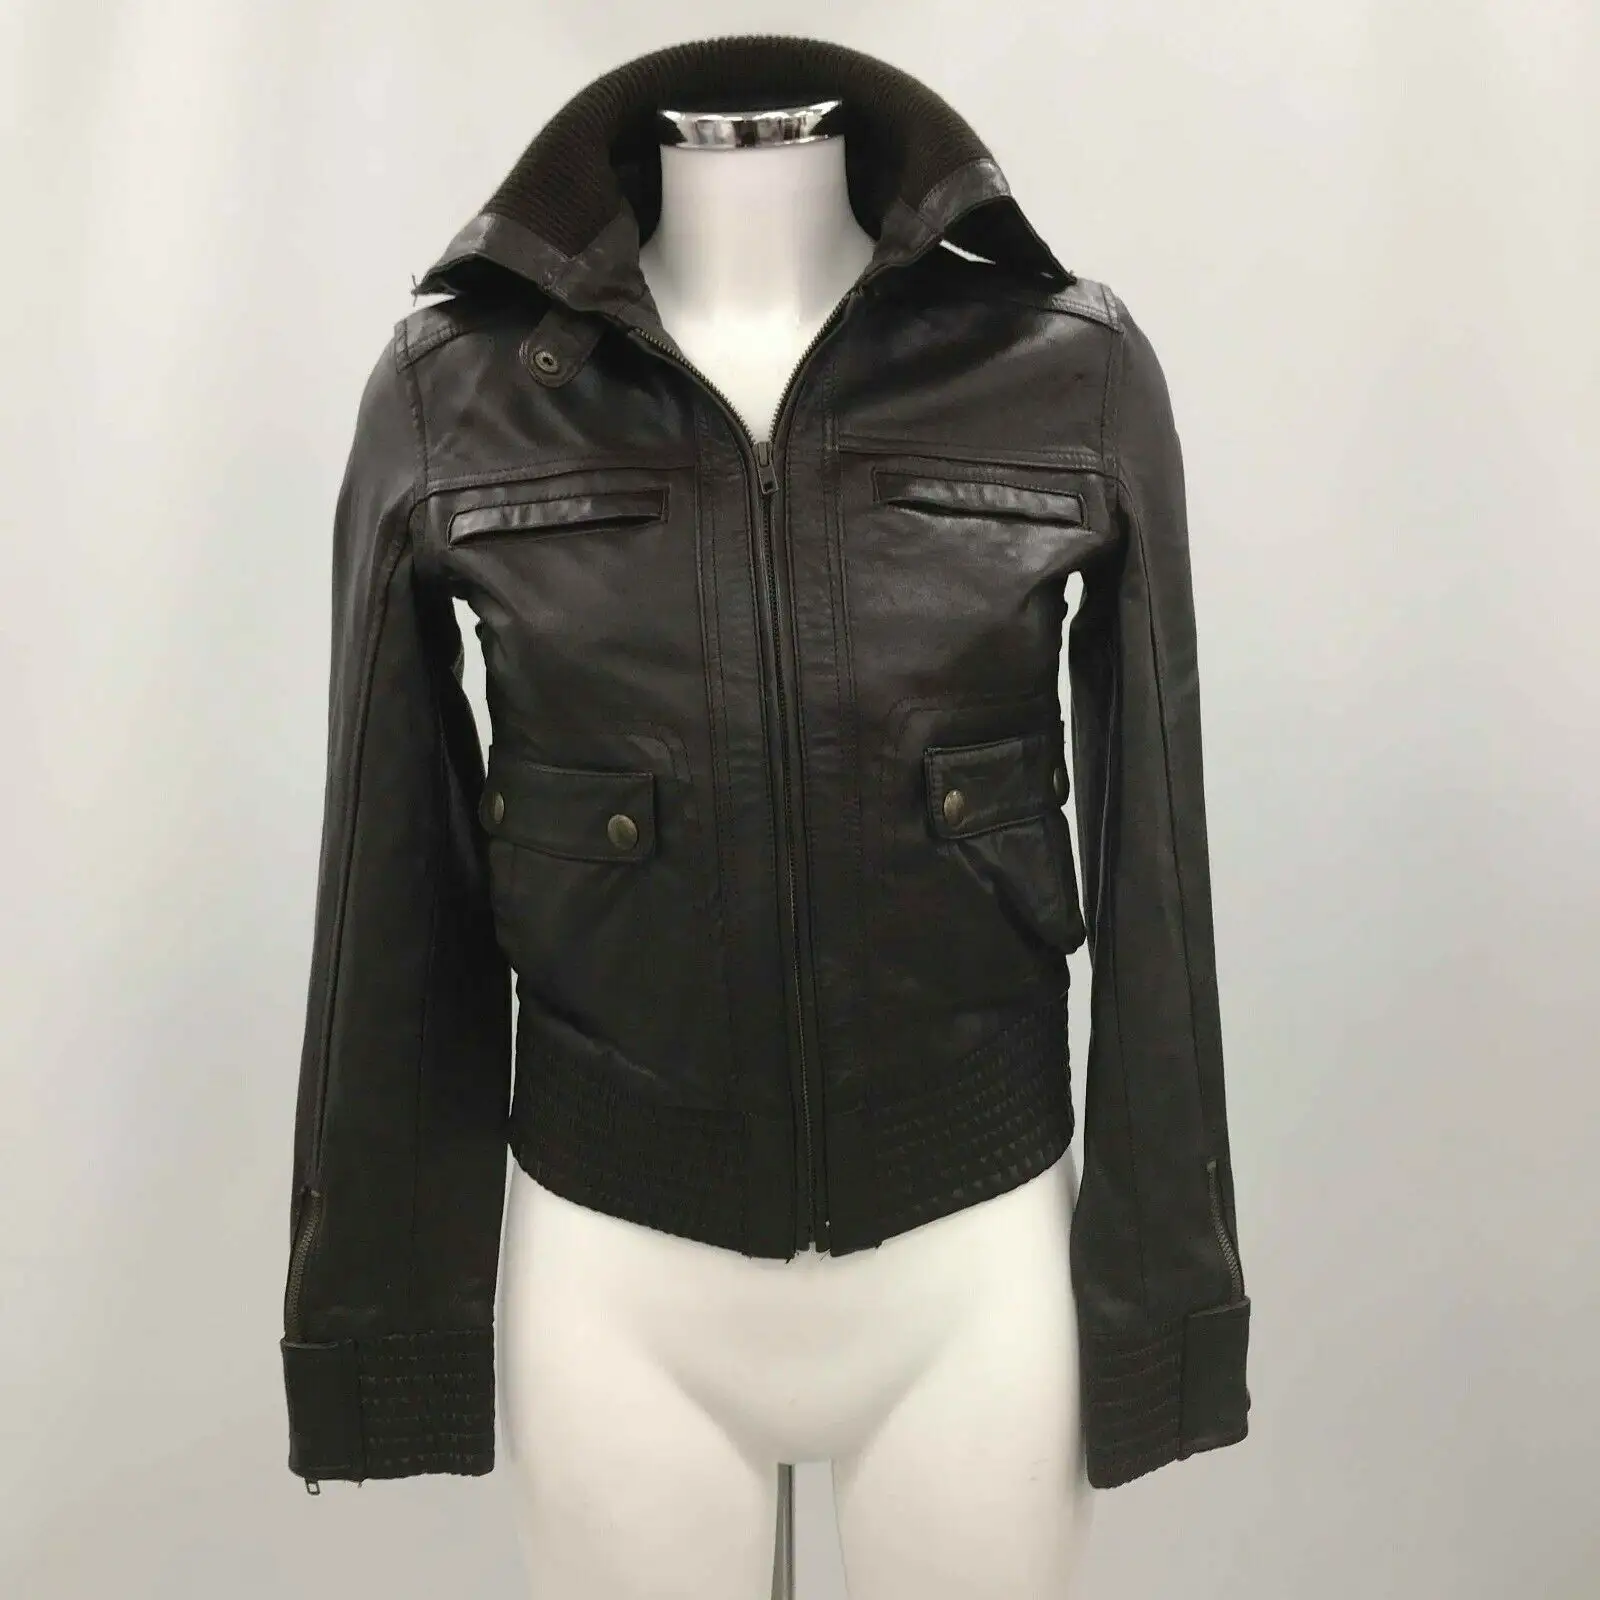 2021 नई फैशन डिजाइन महिला अशुद्ध चमड़े बाइकर जैकेट देवियों बॉम्बर काला आकार-थोक मूल्य